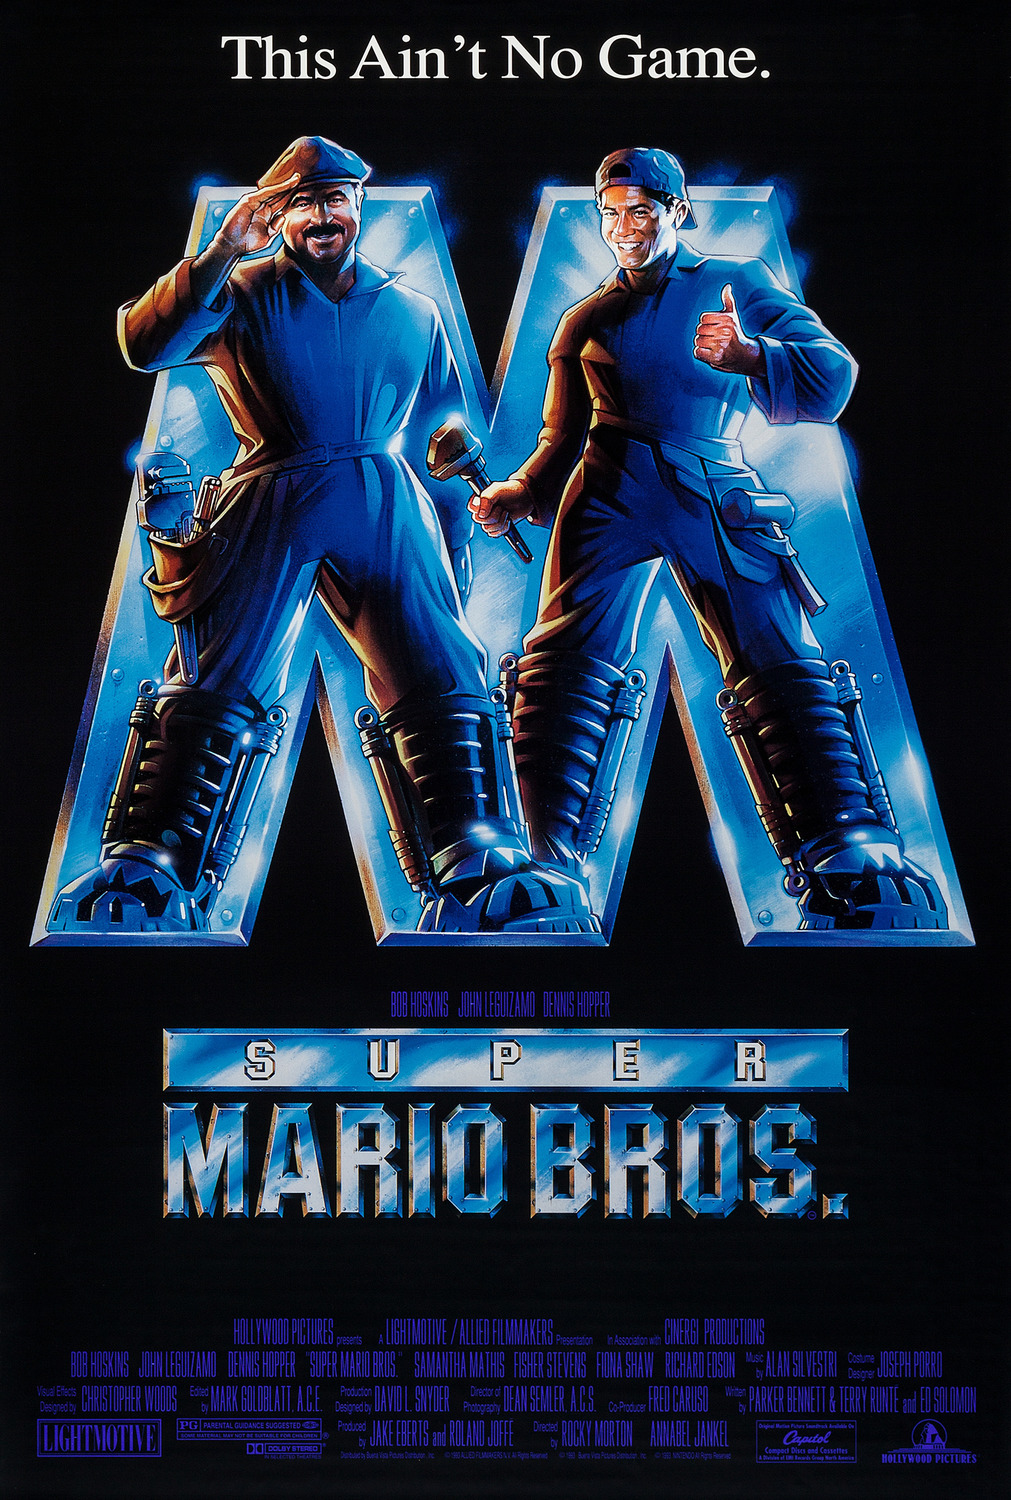 Poster for the film Super Mario Bros.